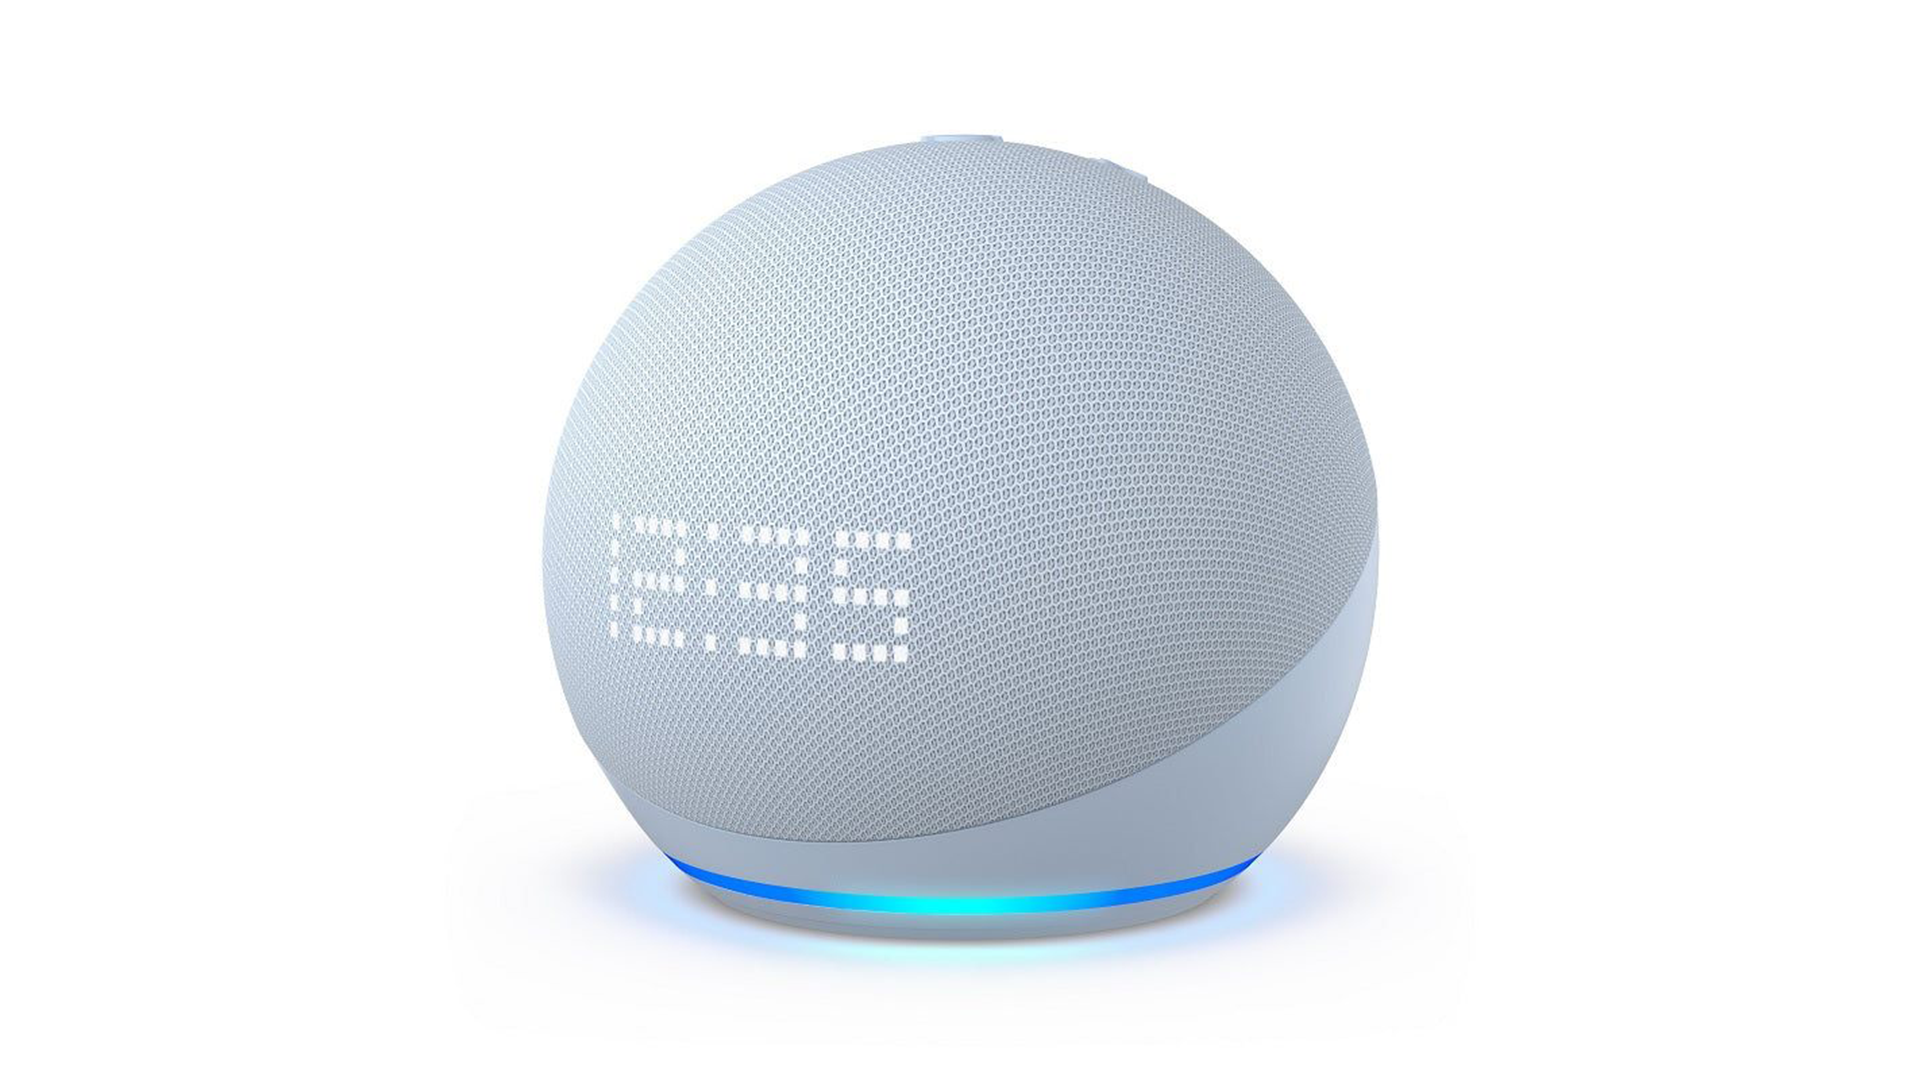 Gift idea for Mum – a blue Amazon Echo Dot 5th generation smart speaker.